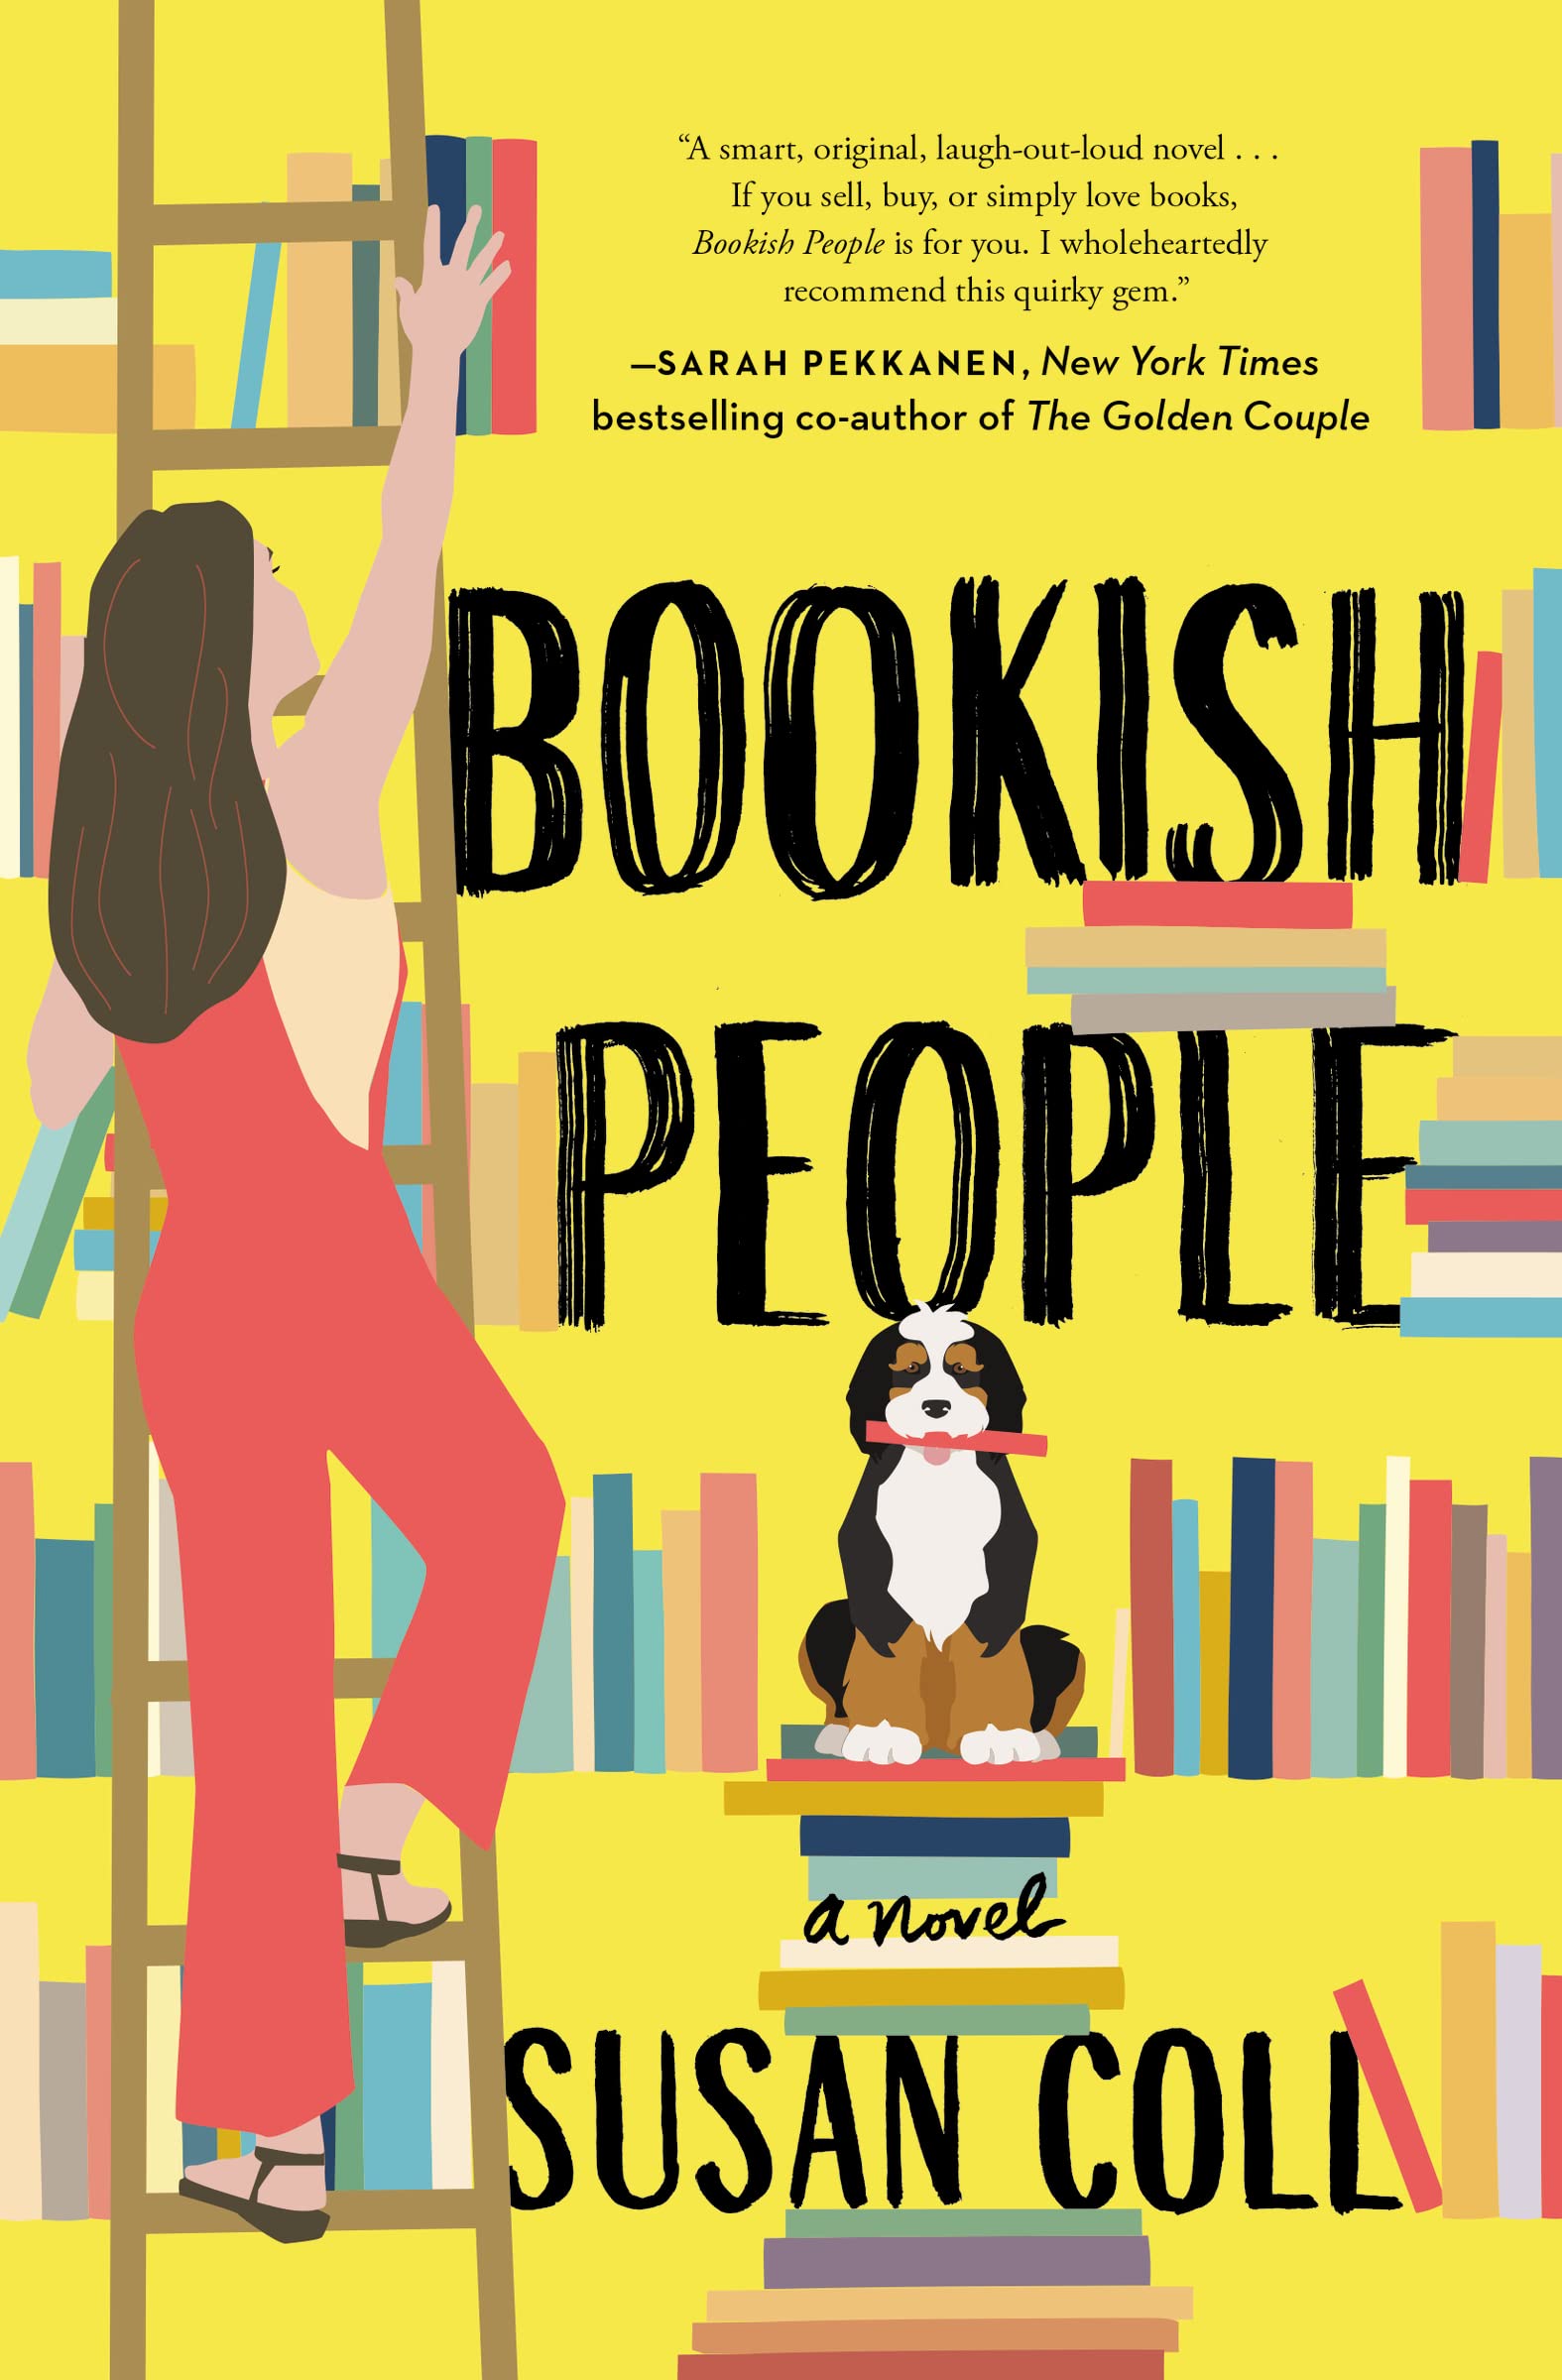 Bookish People